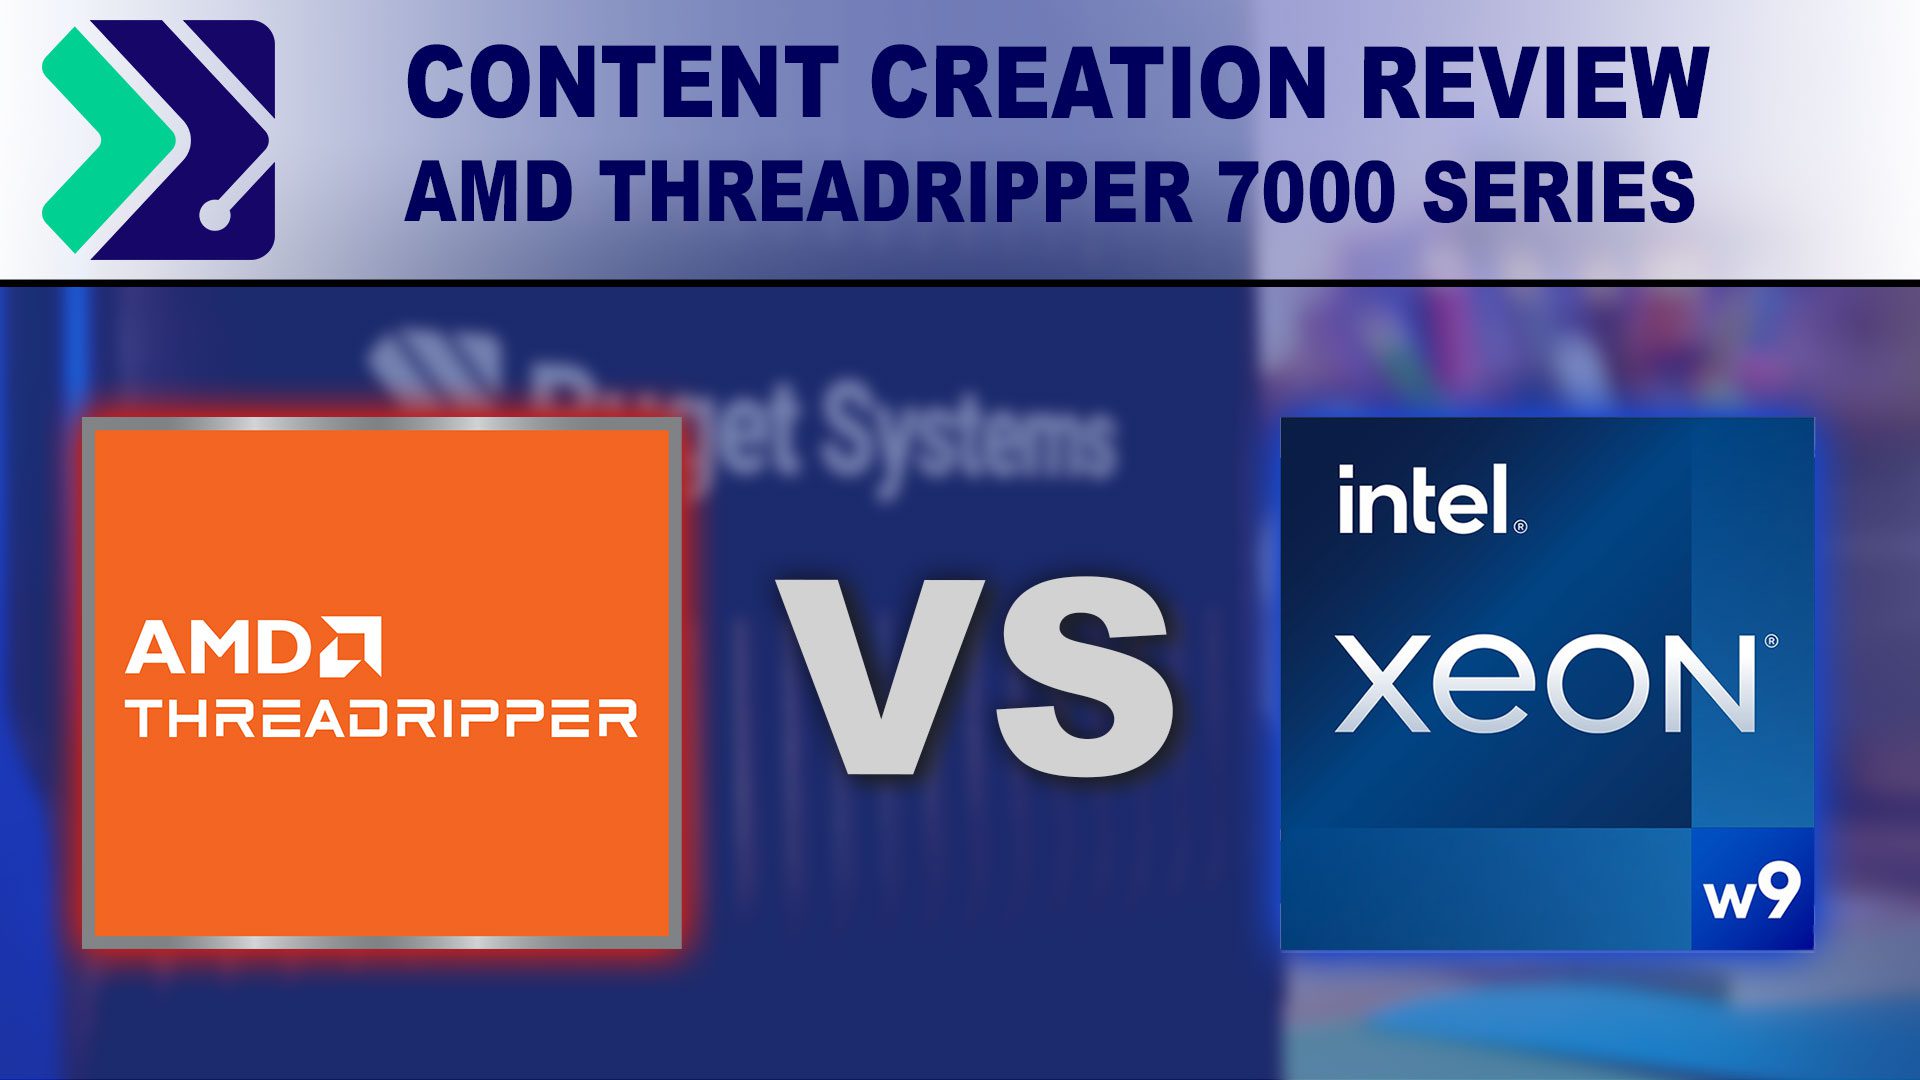 Decorative Image: Content Creation - AMD Threadripper vs Intel Xeon